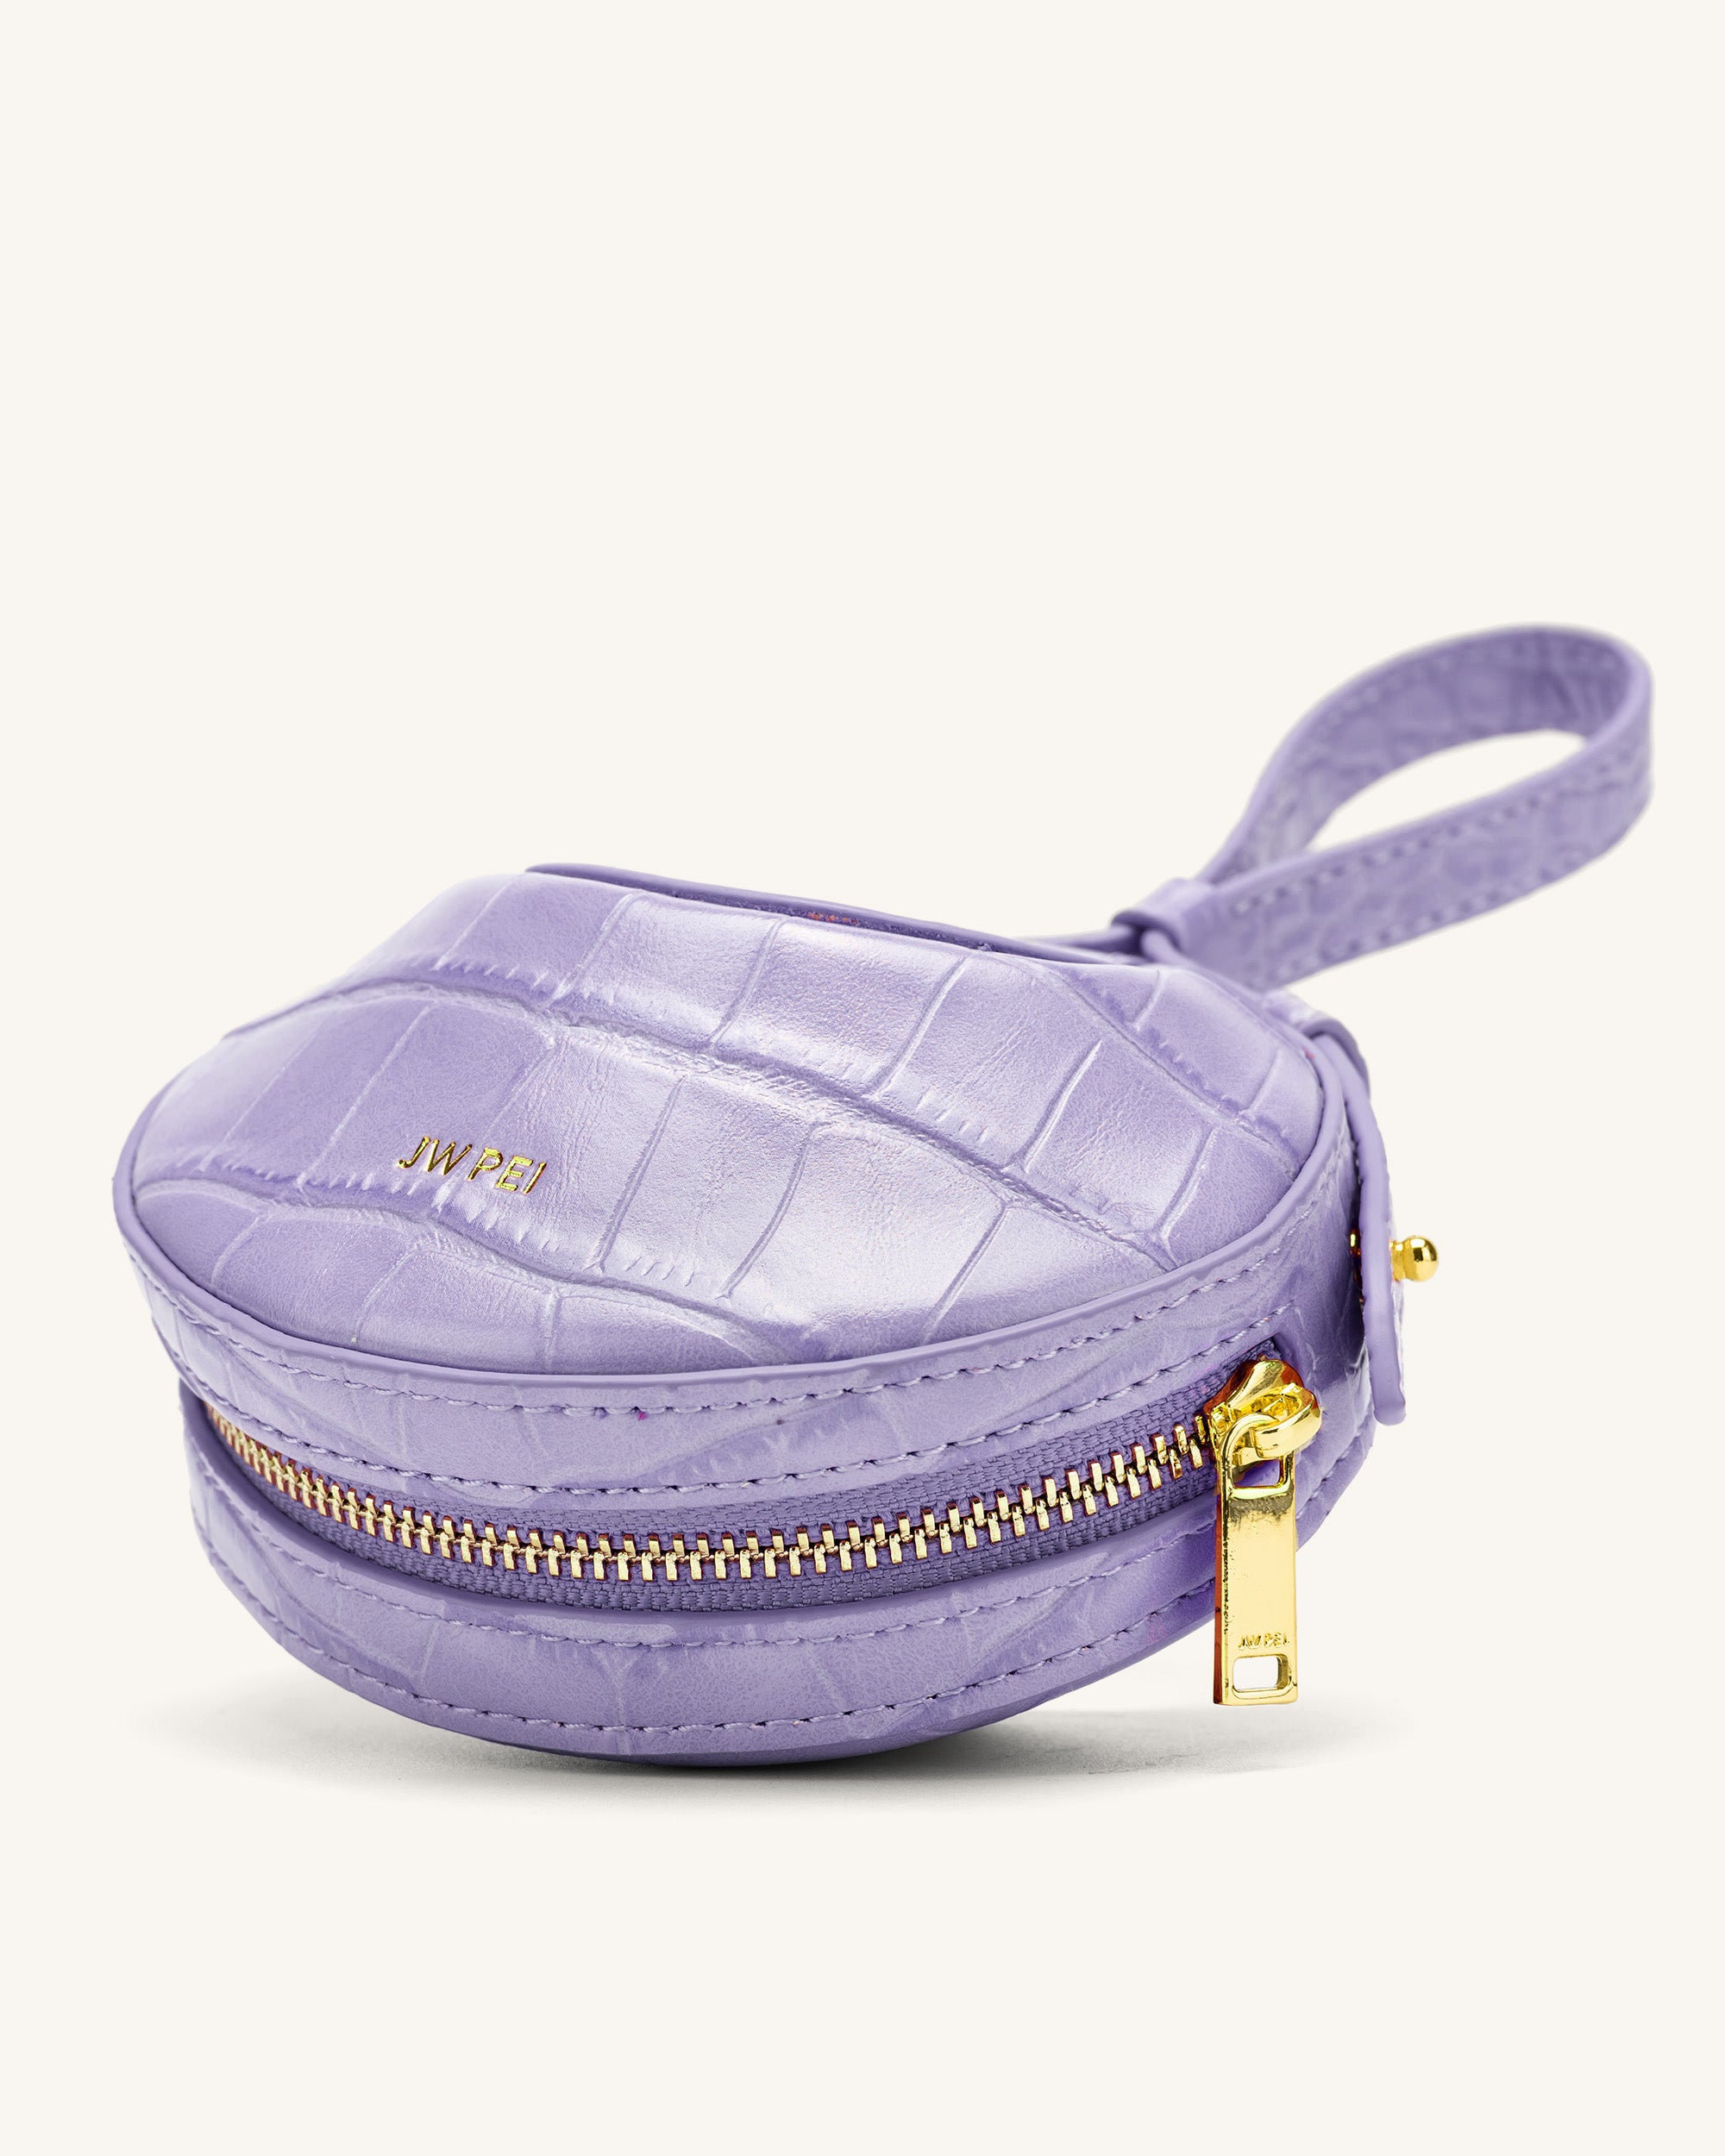 New JW PEI Purple Rantan Super Mini Crocodile Pattern Vegan Leather Handbag